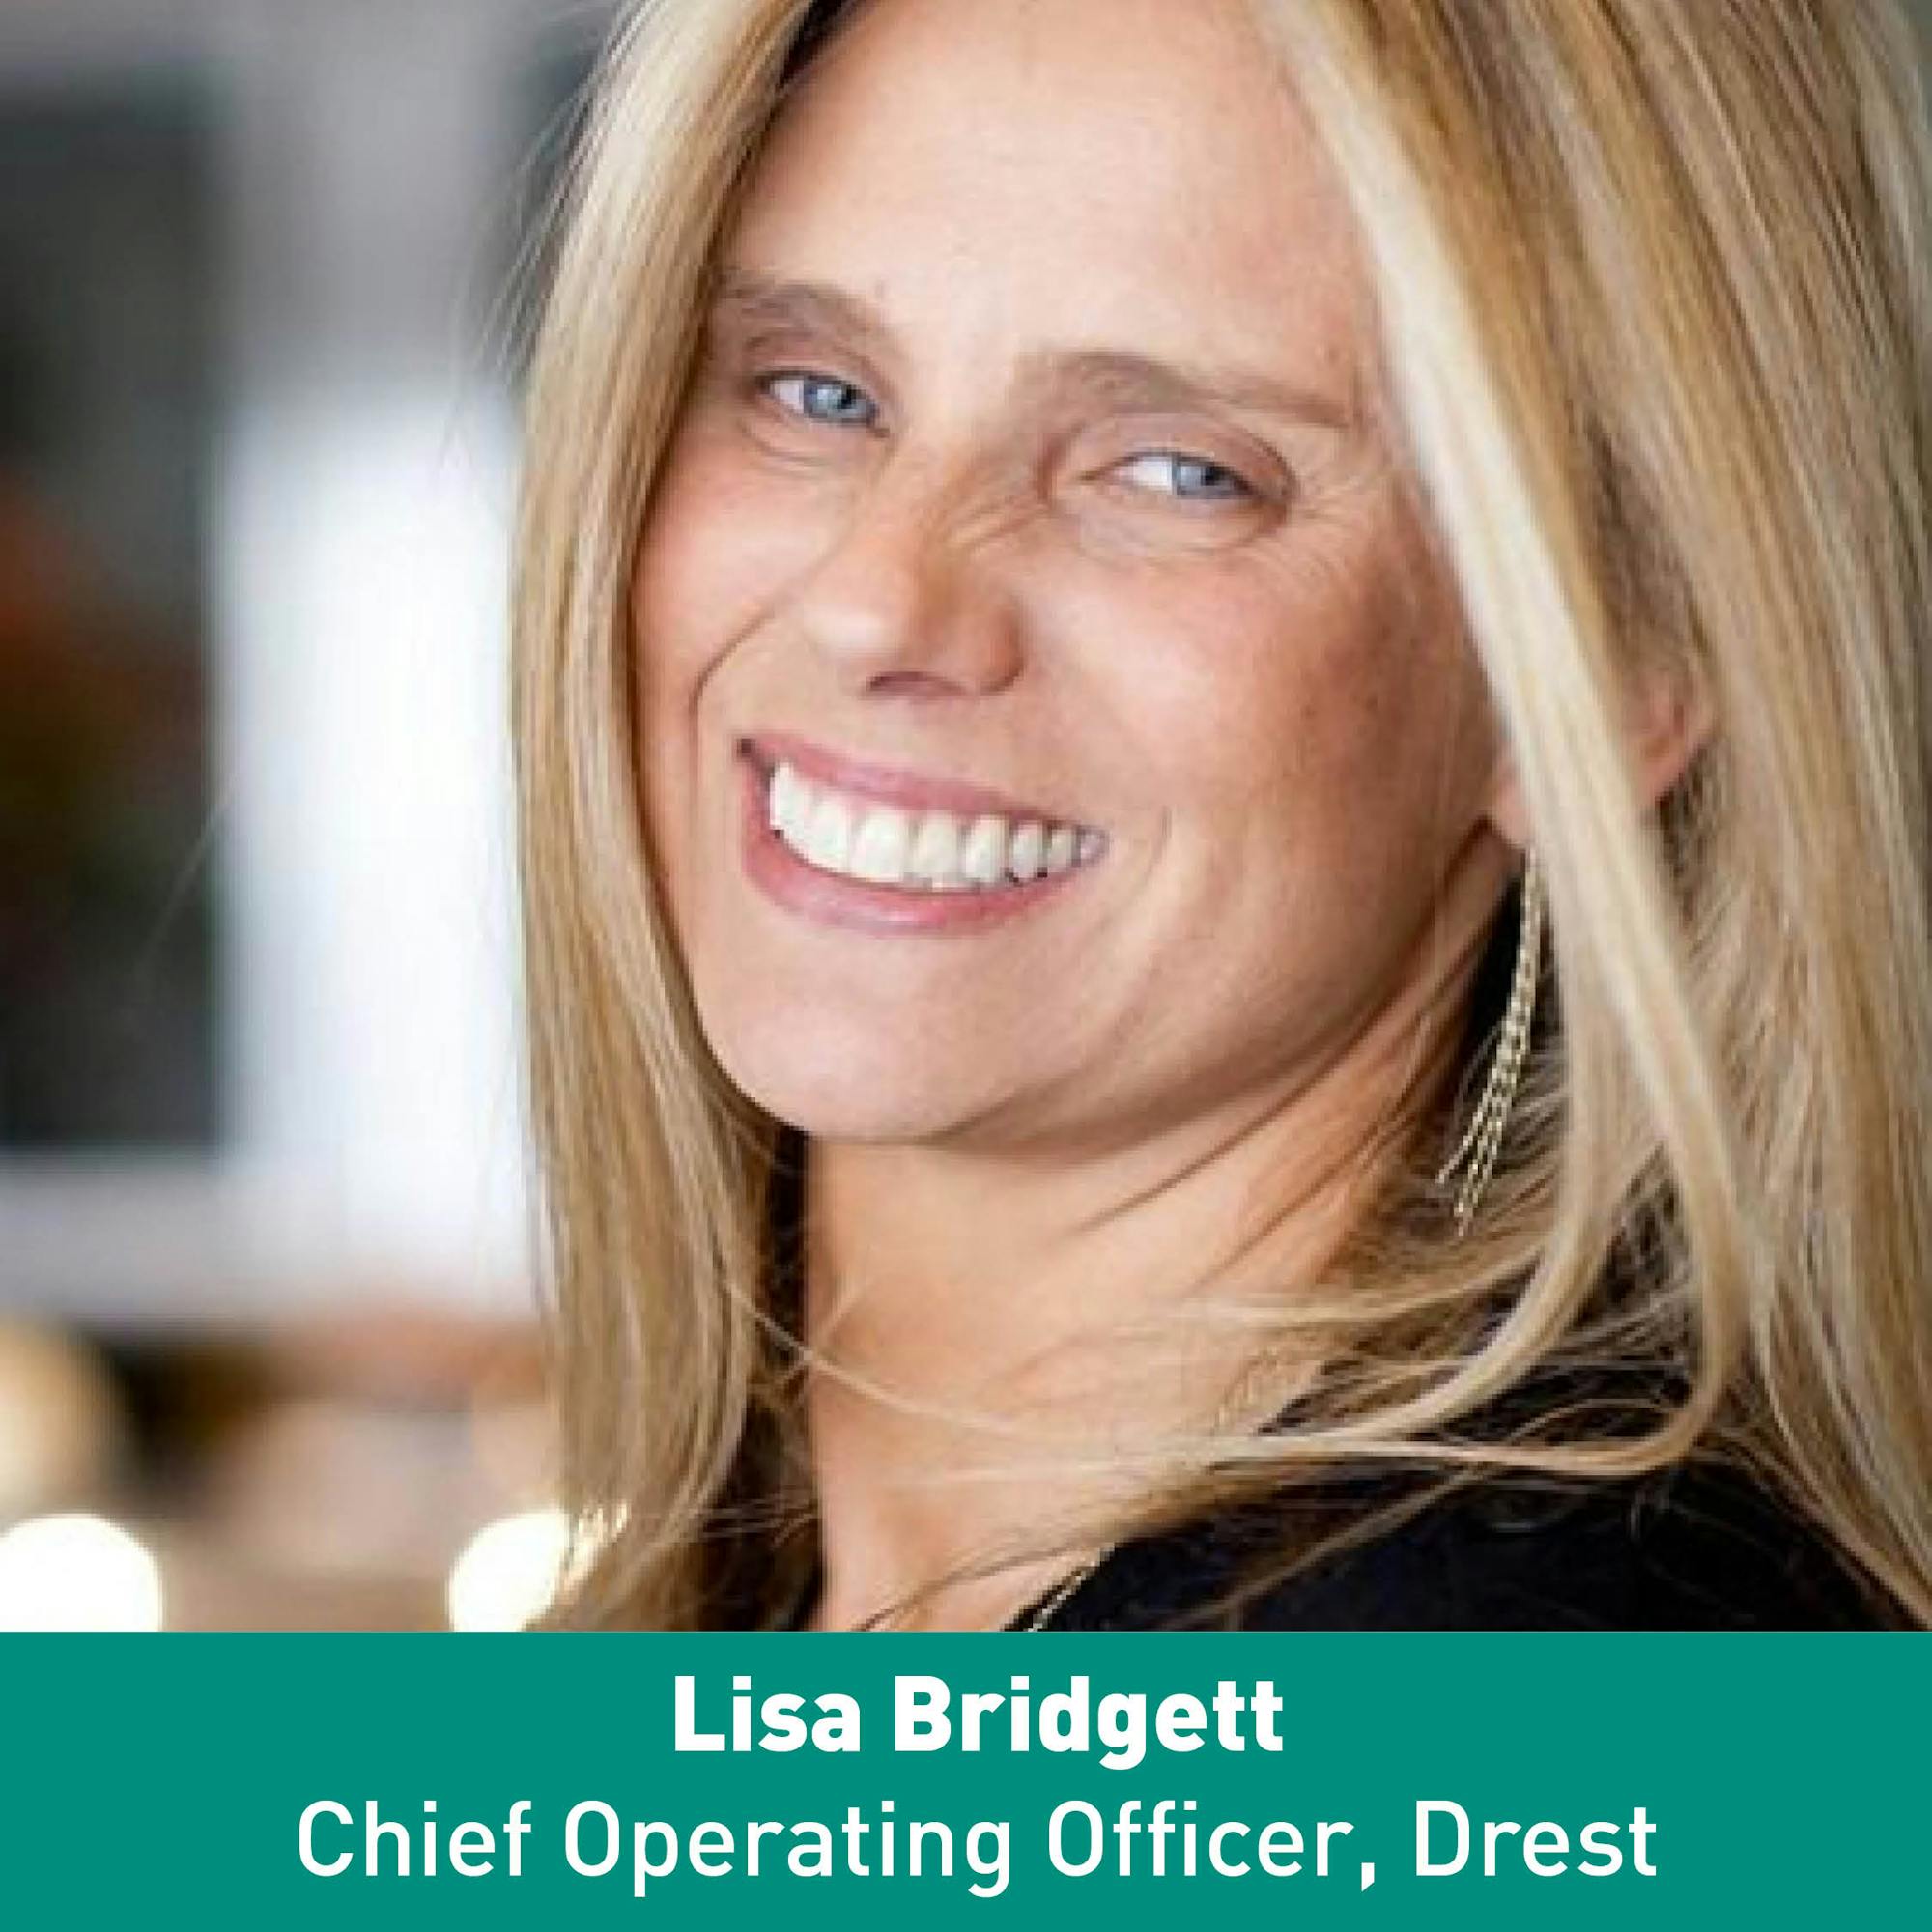 Spotlight on the Speakers  Lisa Bridgett, COO of DREST 